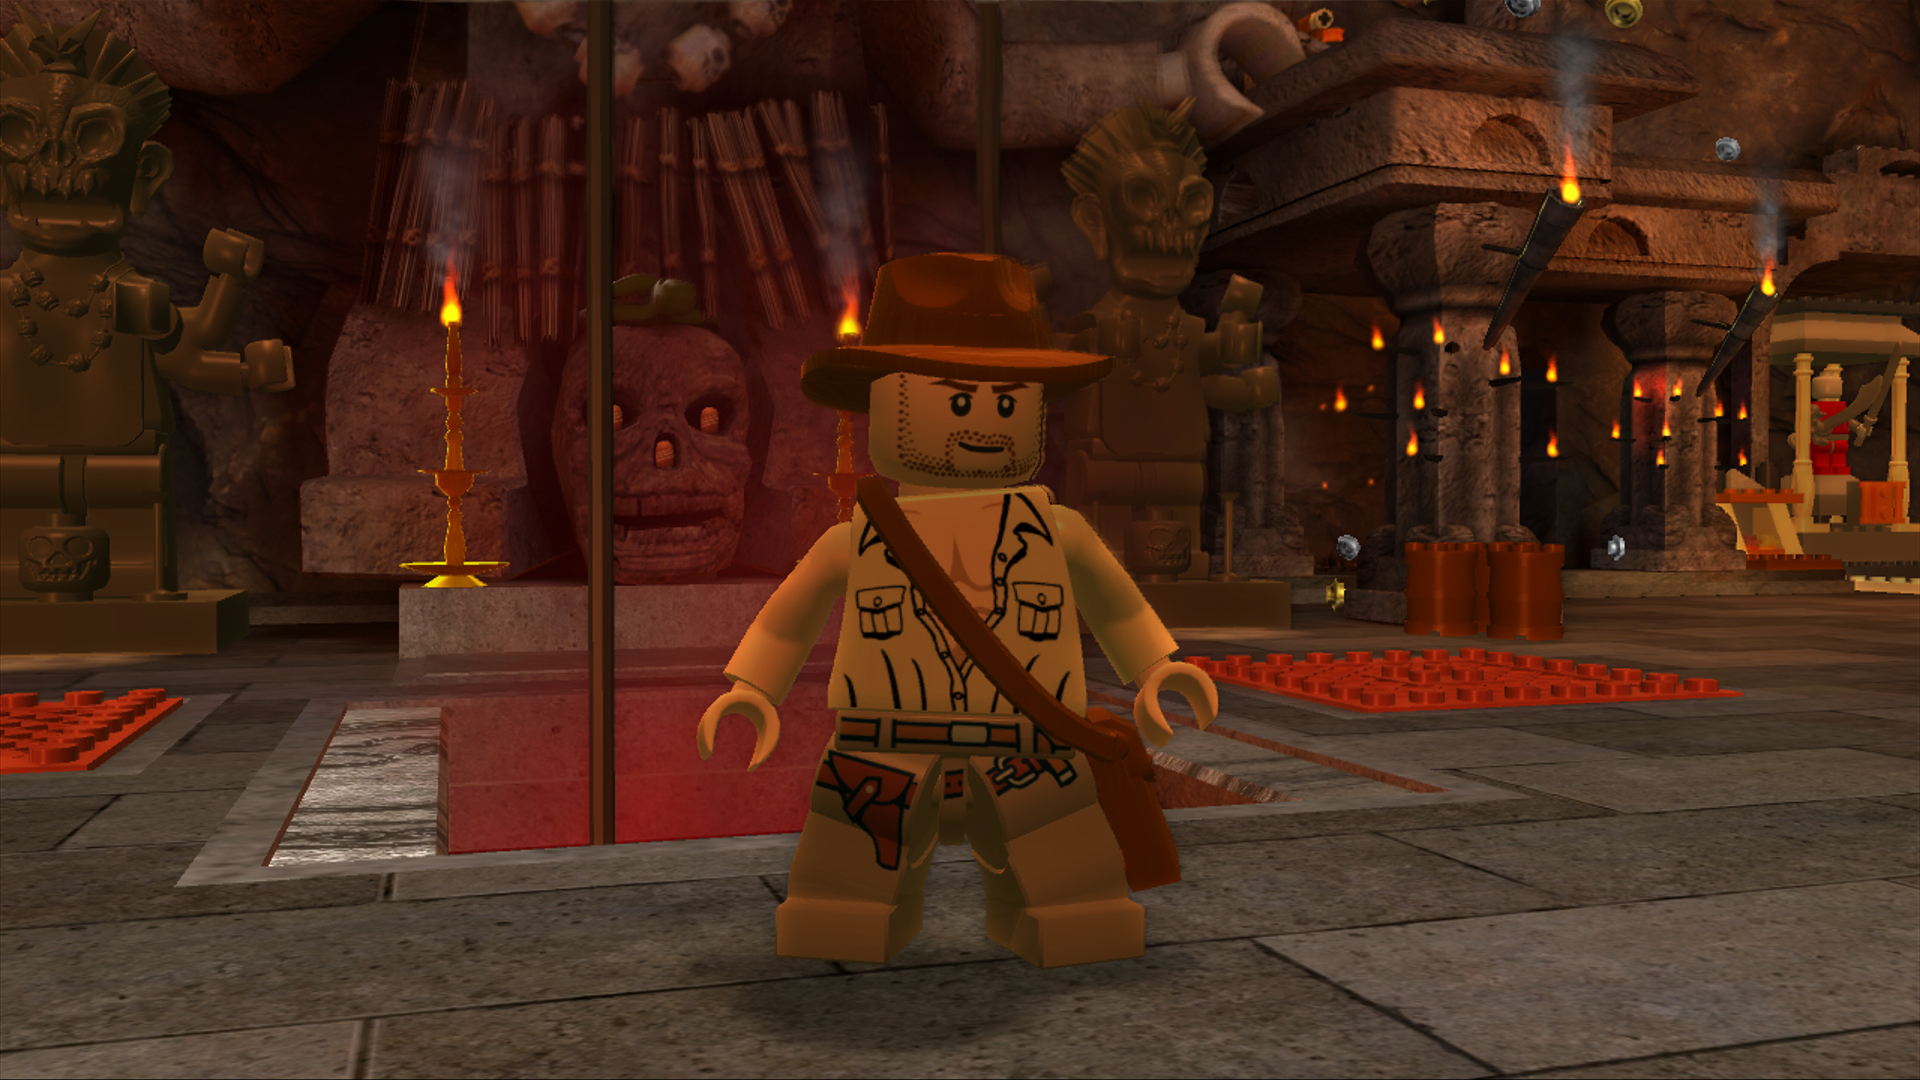 LEGO Indiana Jones 2: The Adventure Continues - IGN